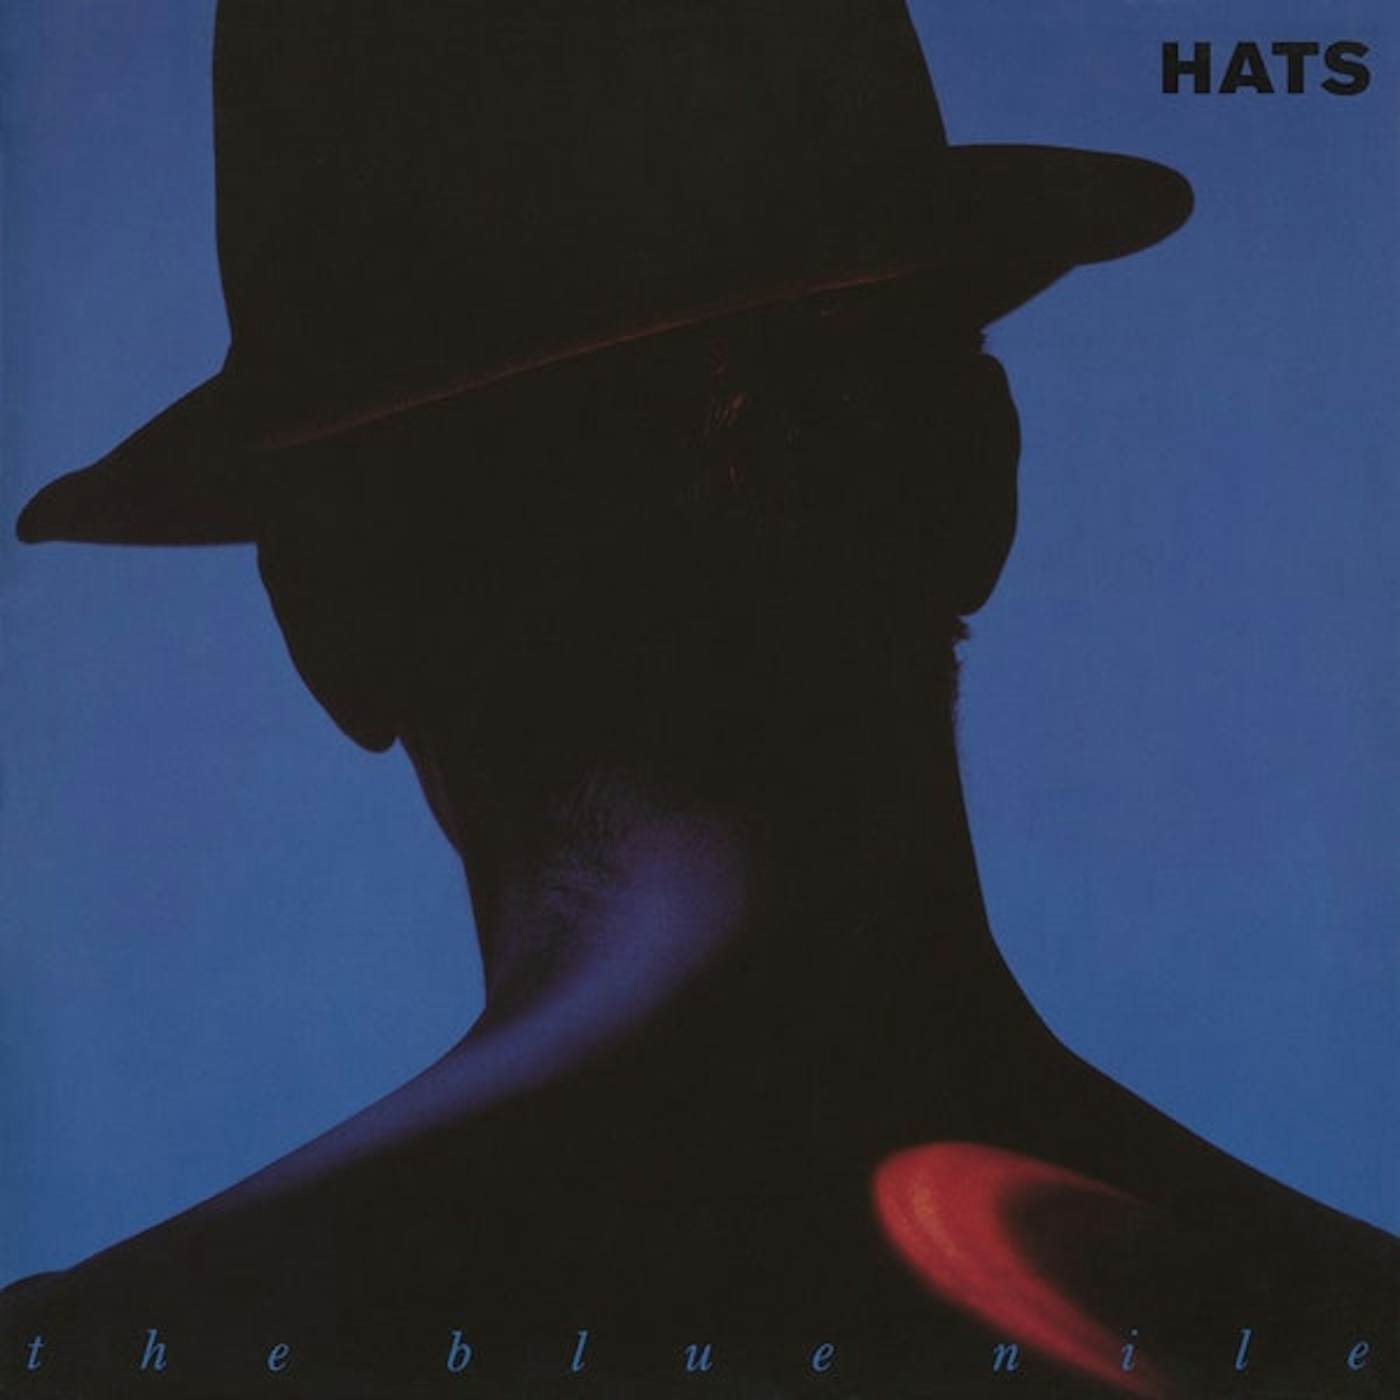 Blue Nile HATS CD